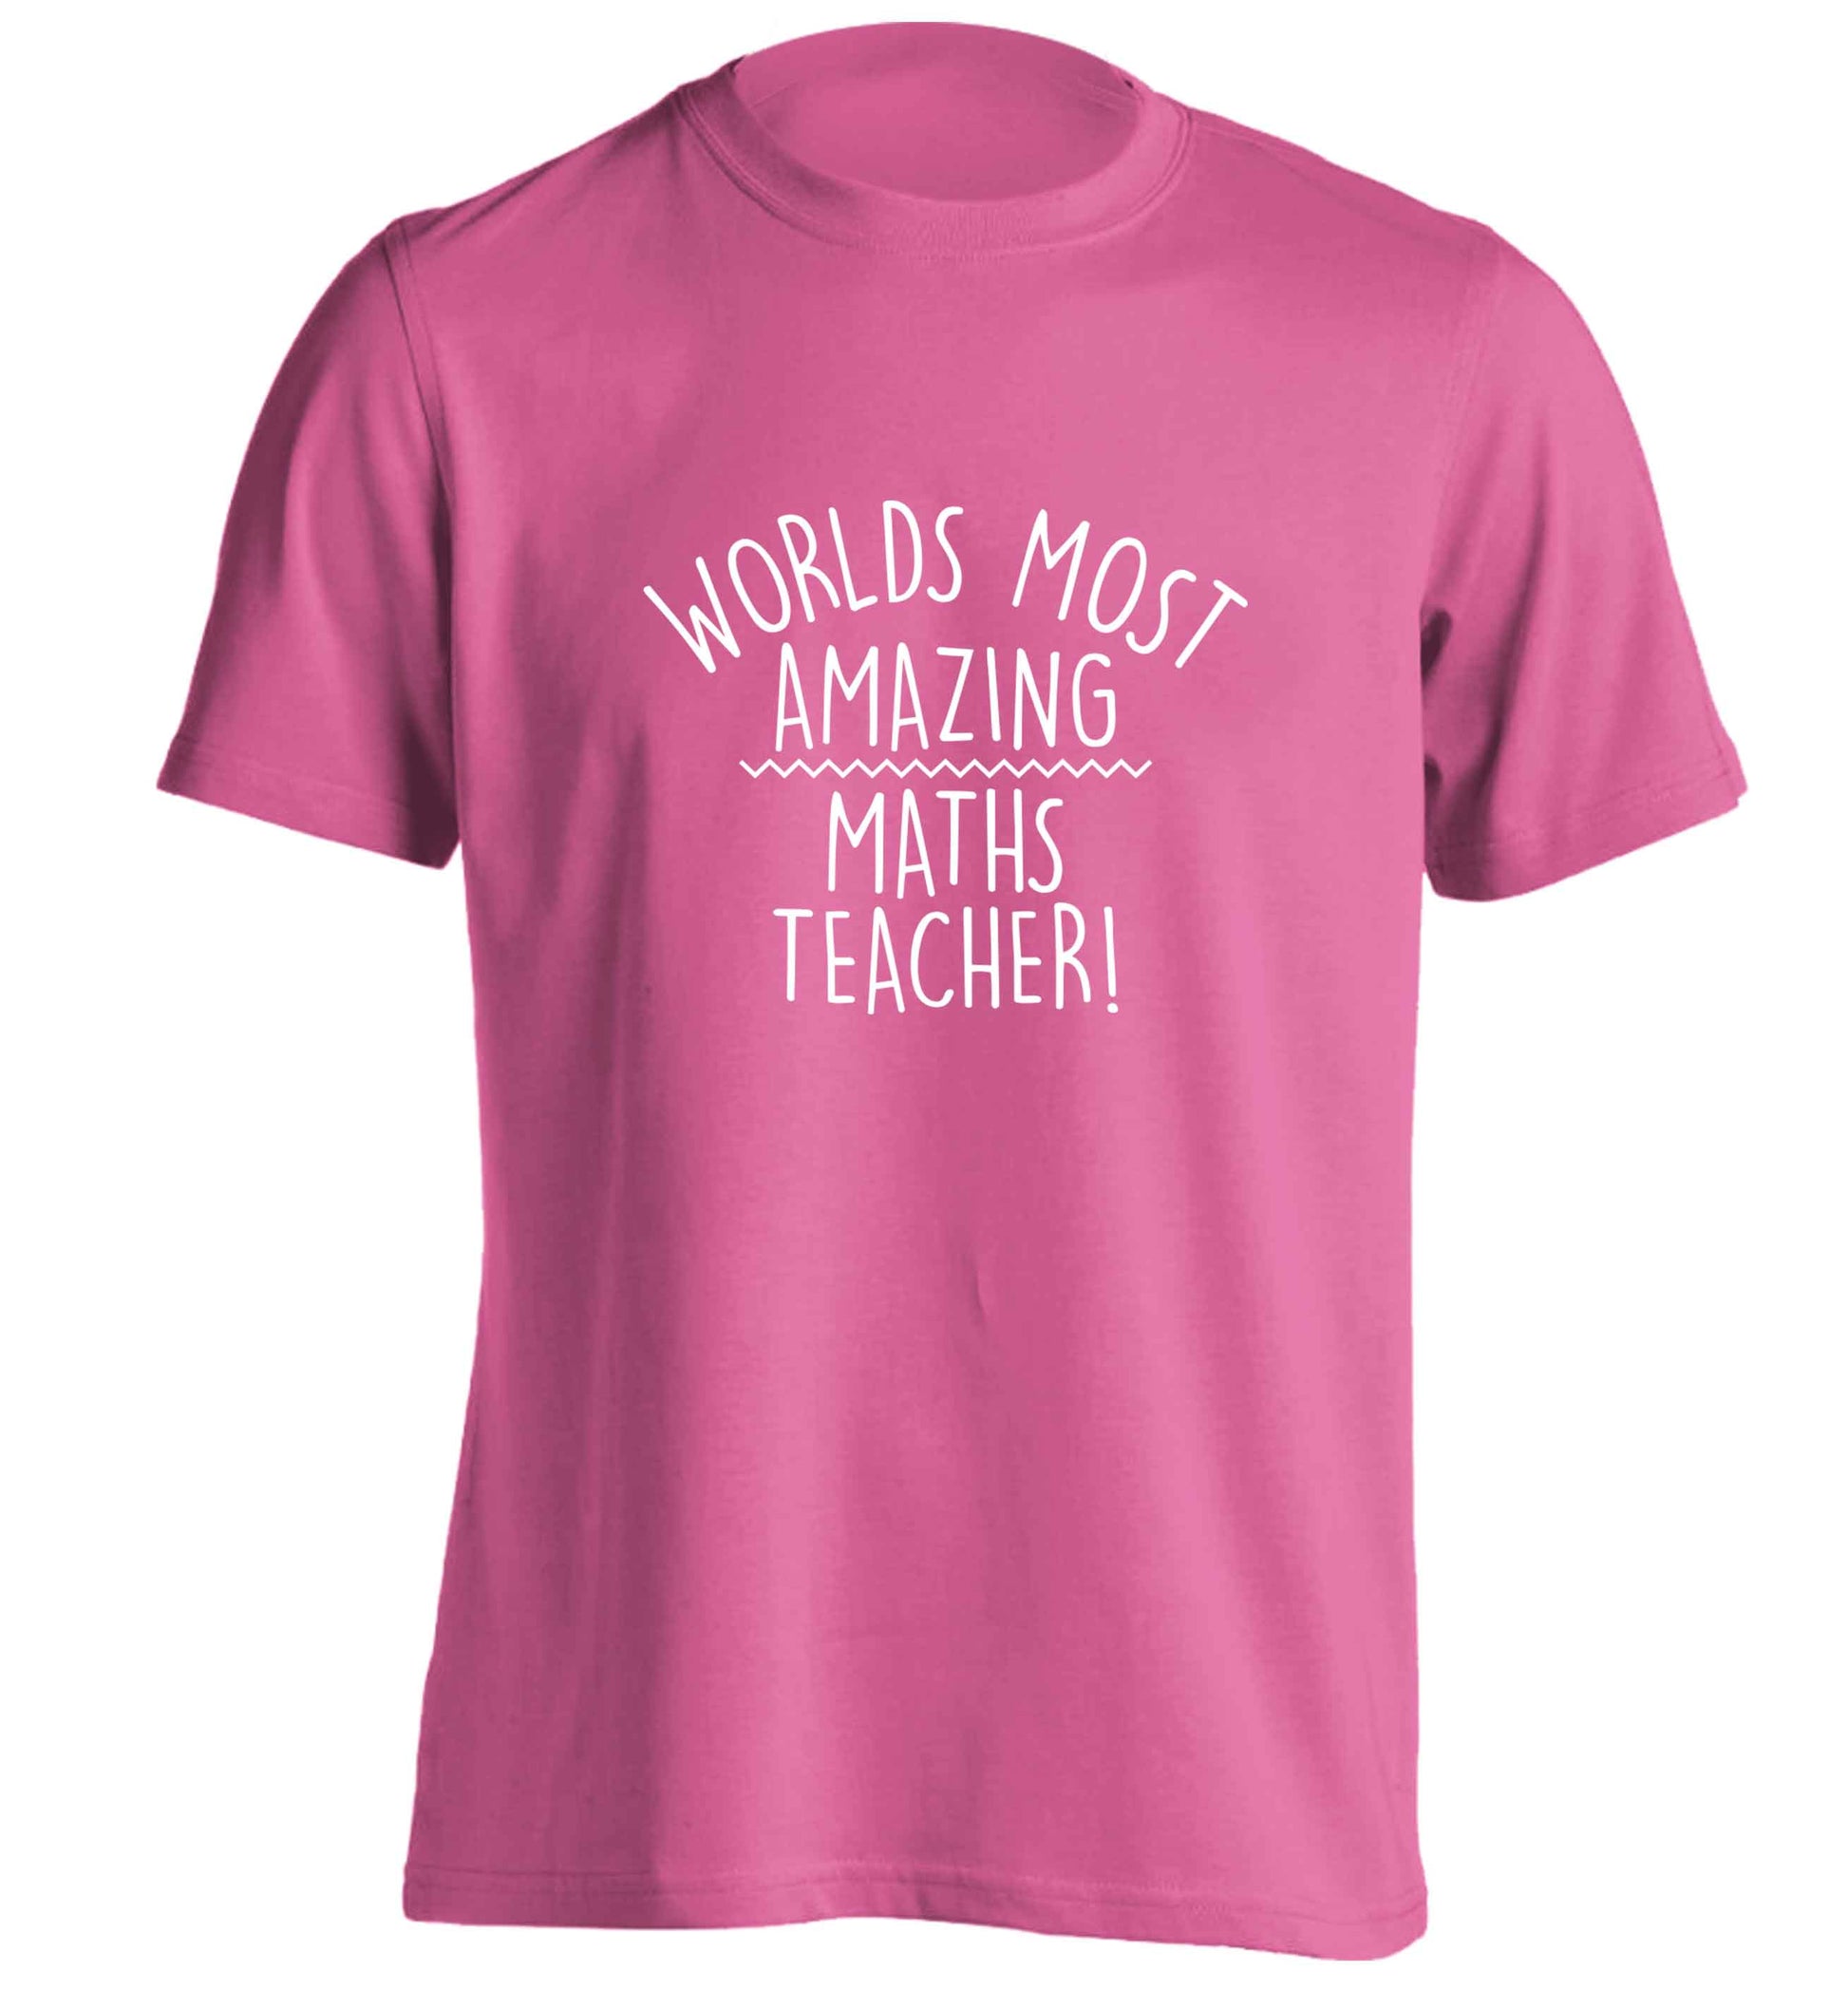 Worlds most amazing maths teacher adults unisex pink Tshirt 2XL